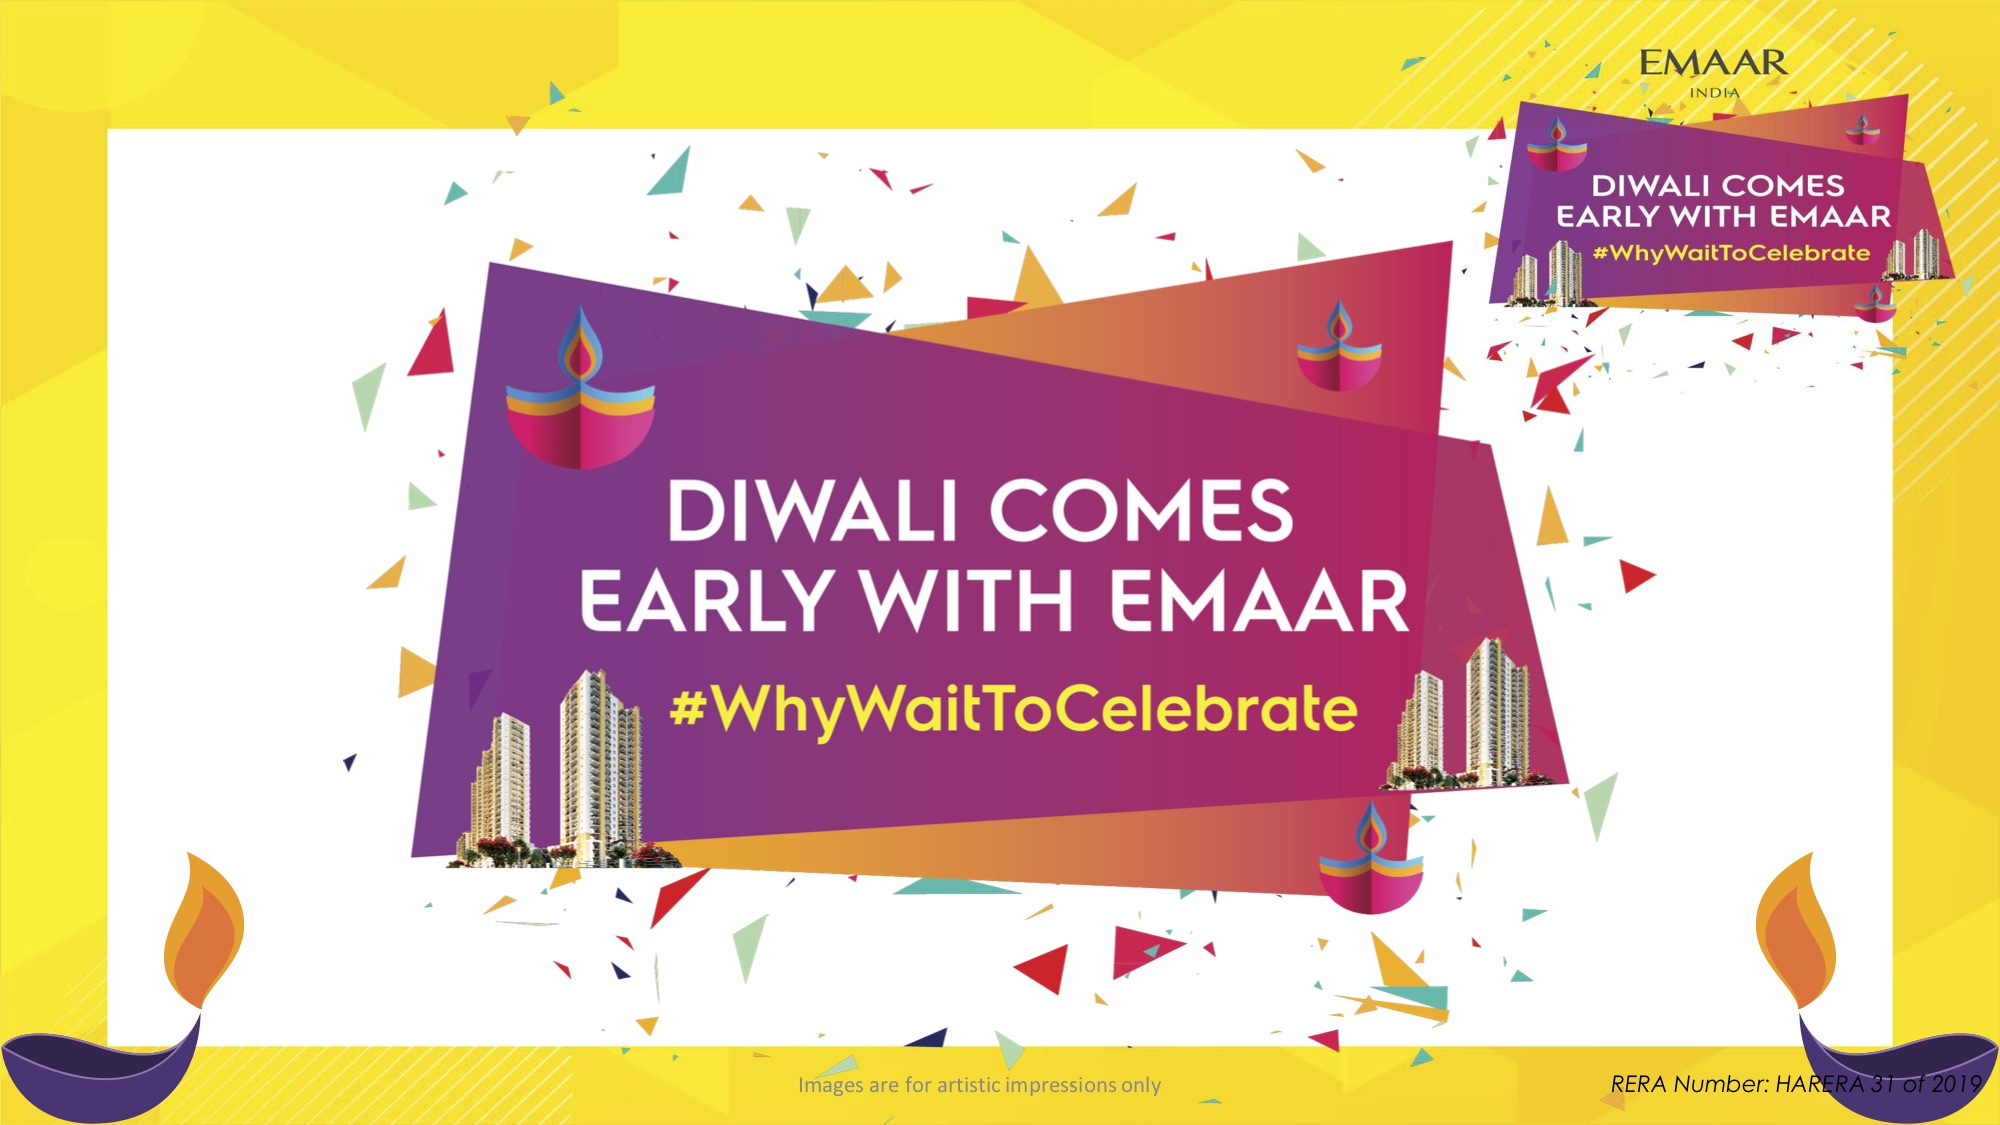 Emaar Digi Homes Offers 30:70 Payment Plan, Diwali Comes Early Update